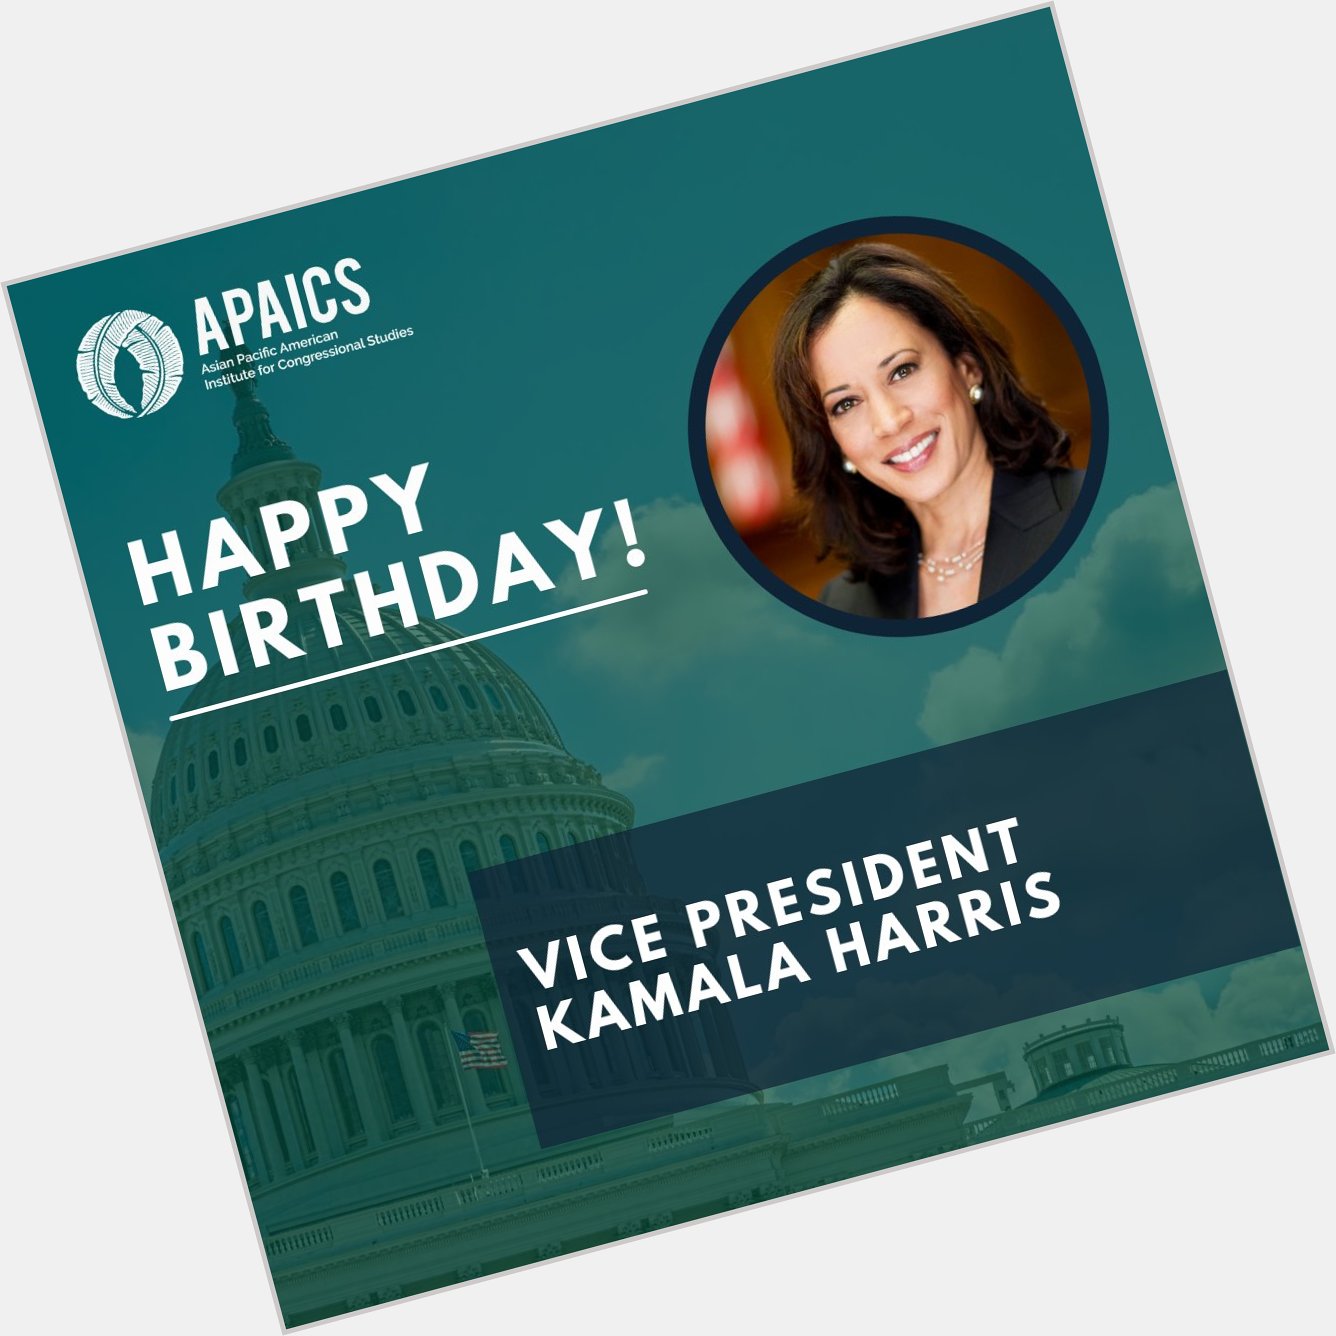 Wishing a happy birthday to Vice President Kamala Harris 